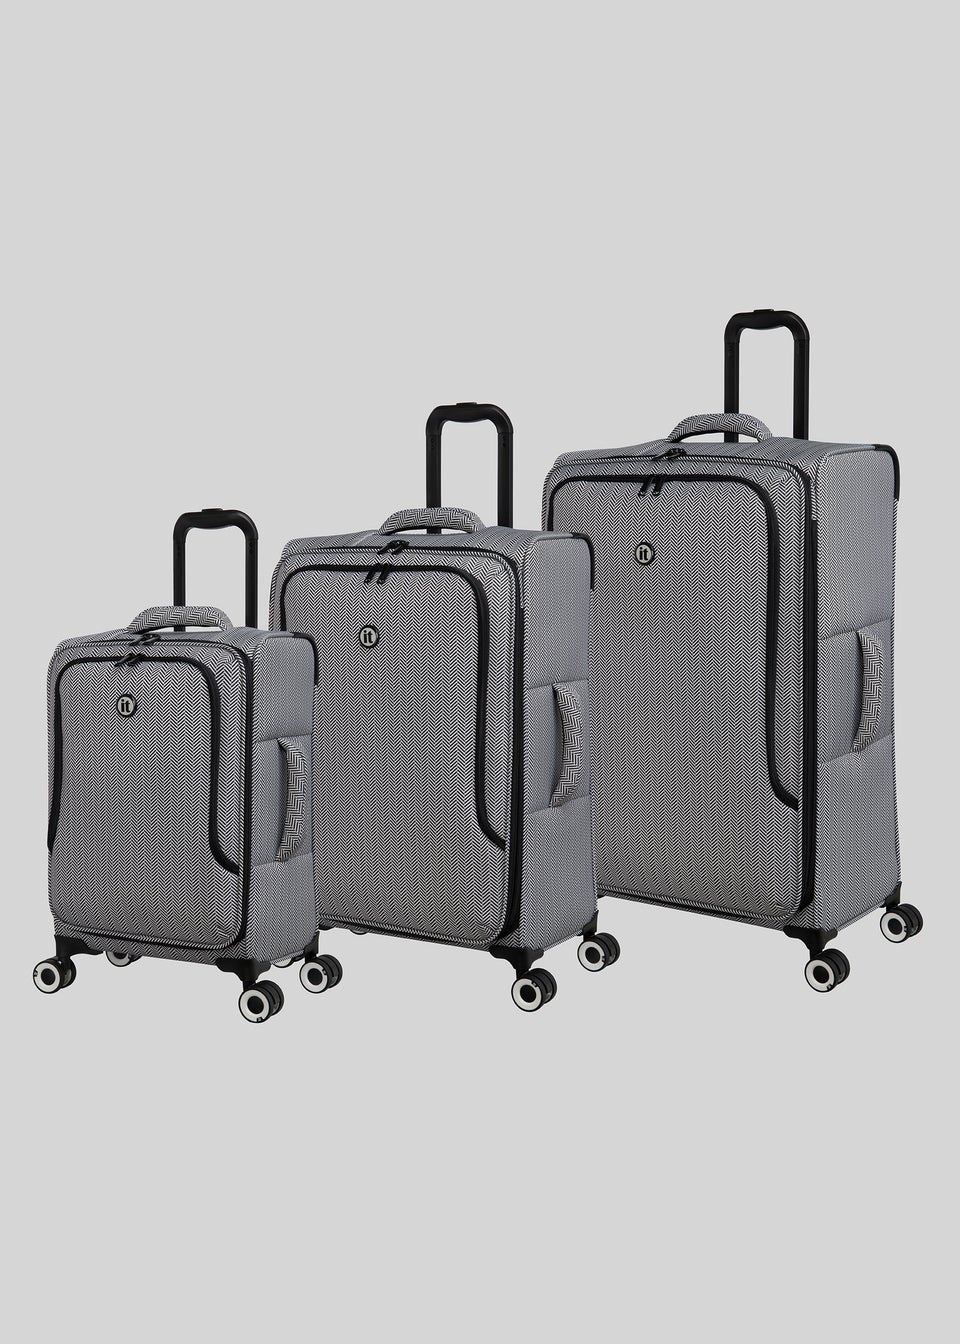 IT Luggage Black & White Trulite Herringbone Suitcase